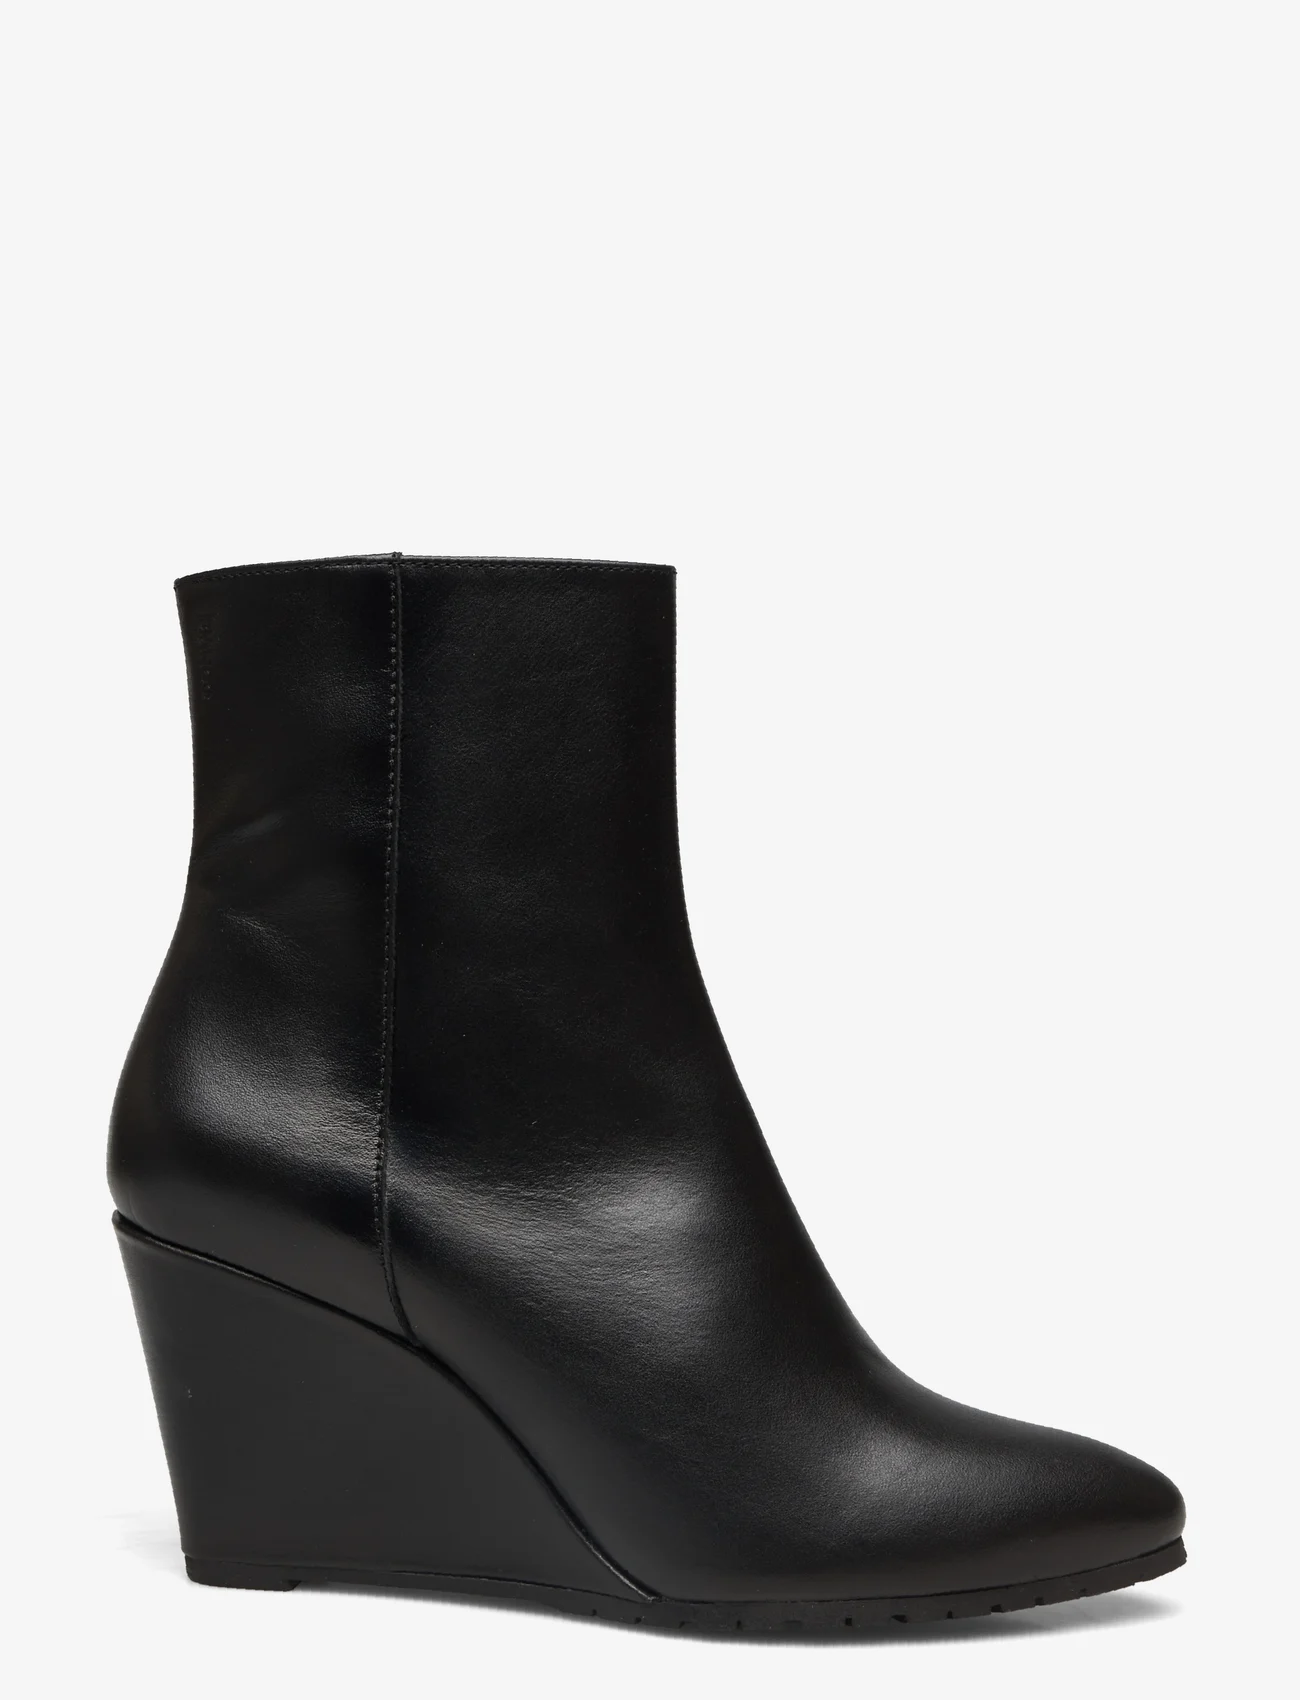 Bianco - BIATINA Wedge Ankle Boot Crust - høye hæler - black - 1